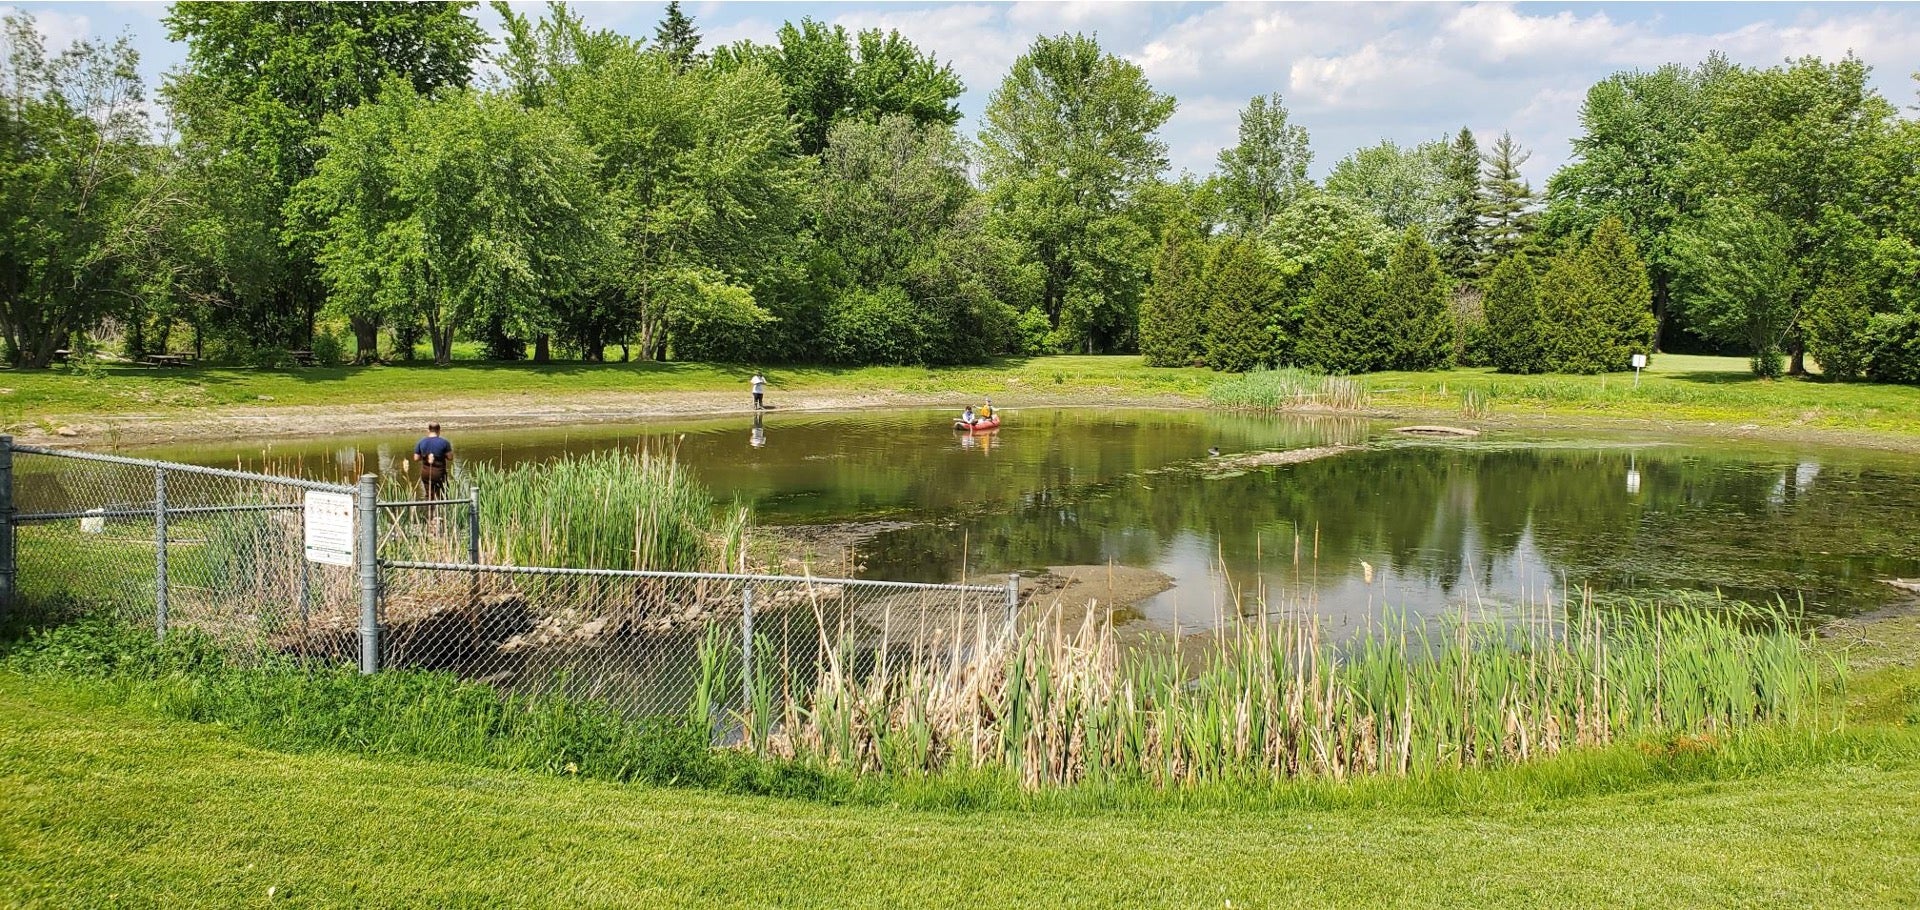 A stormwater pond in summer, Kitchener, Ontario